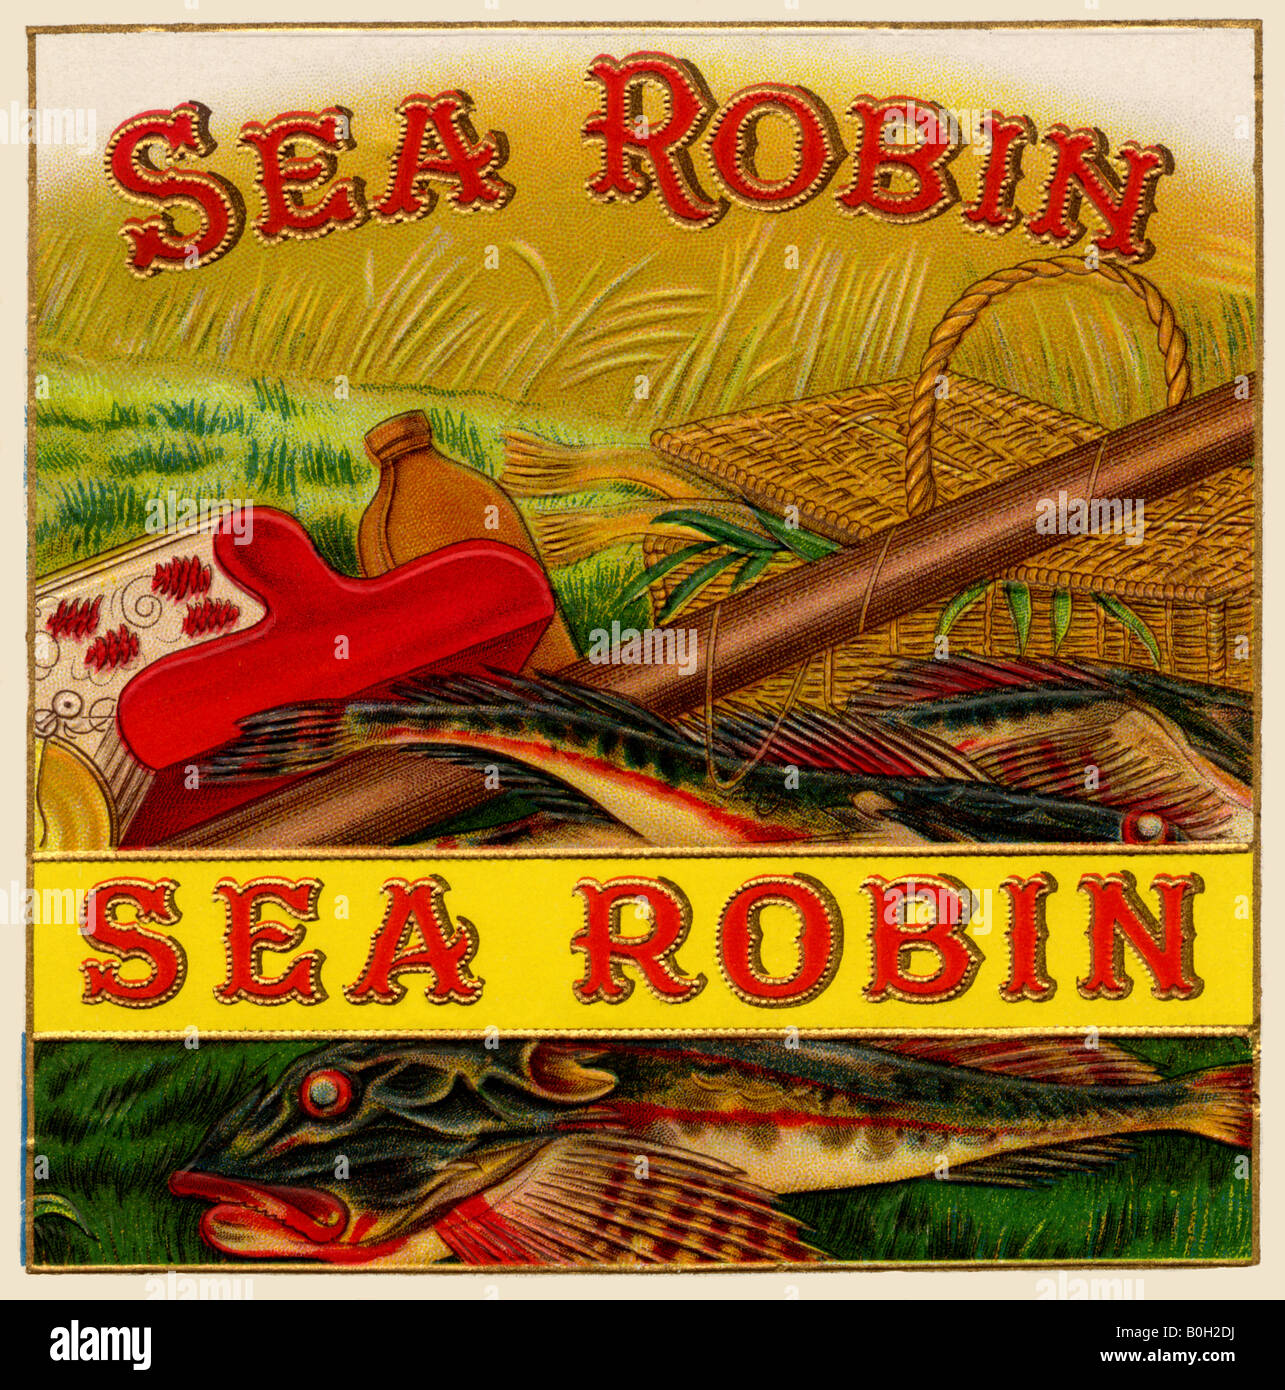 Sea Robin Zigarren Stockfoto